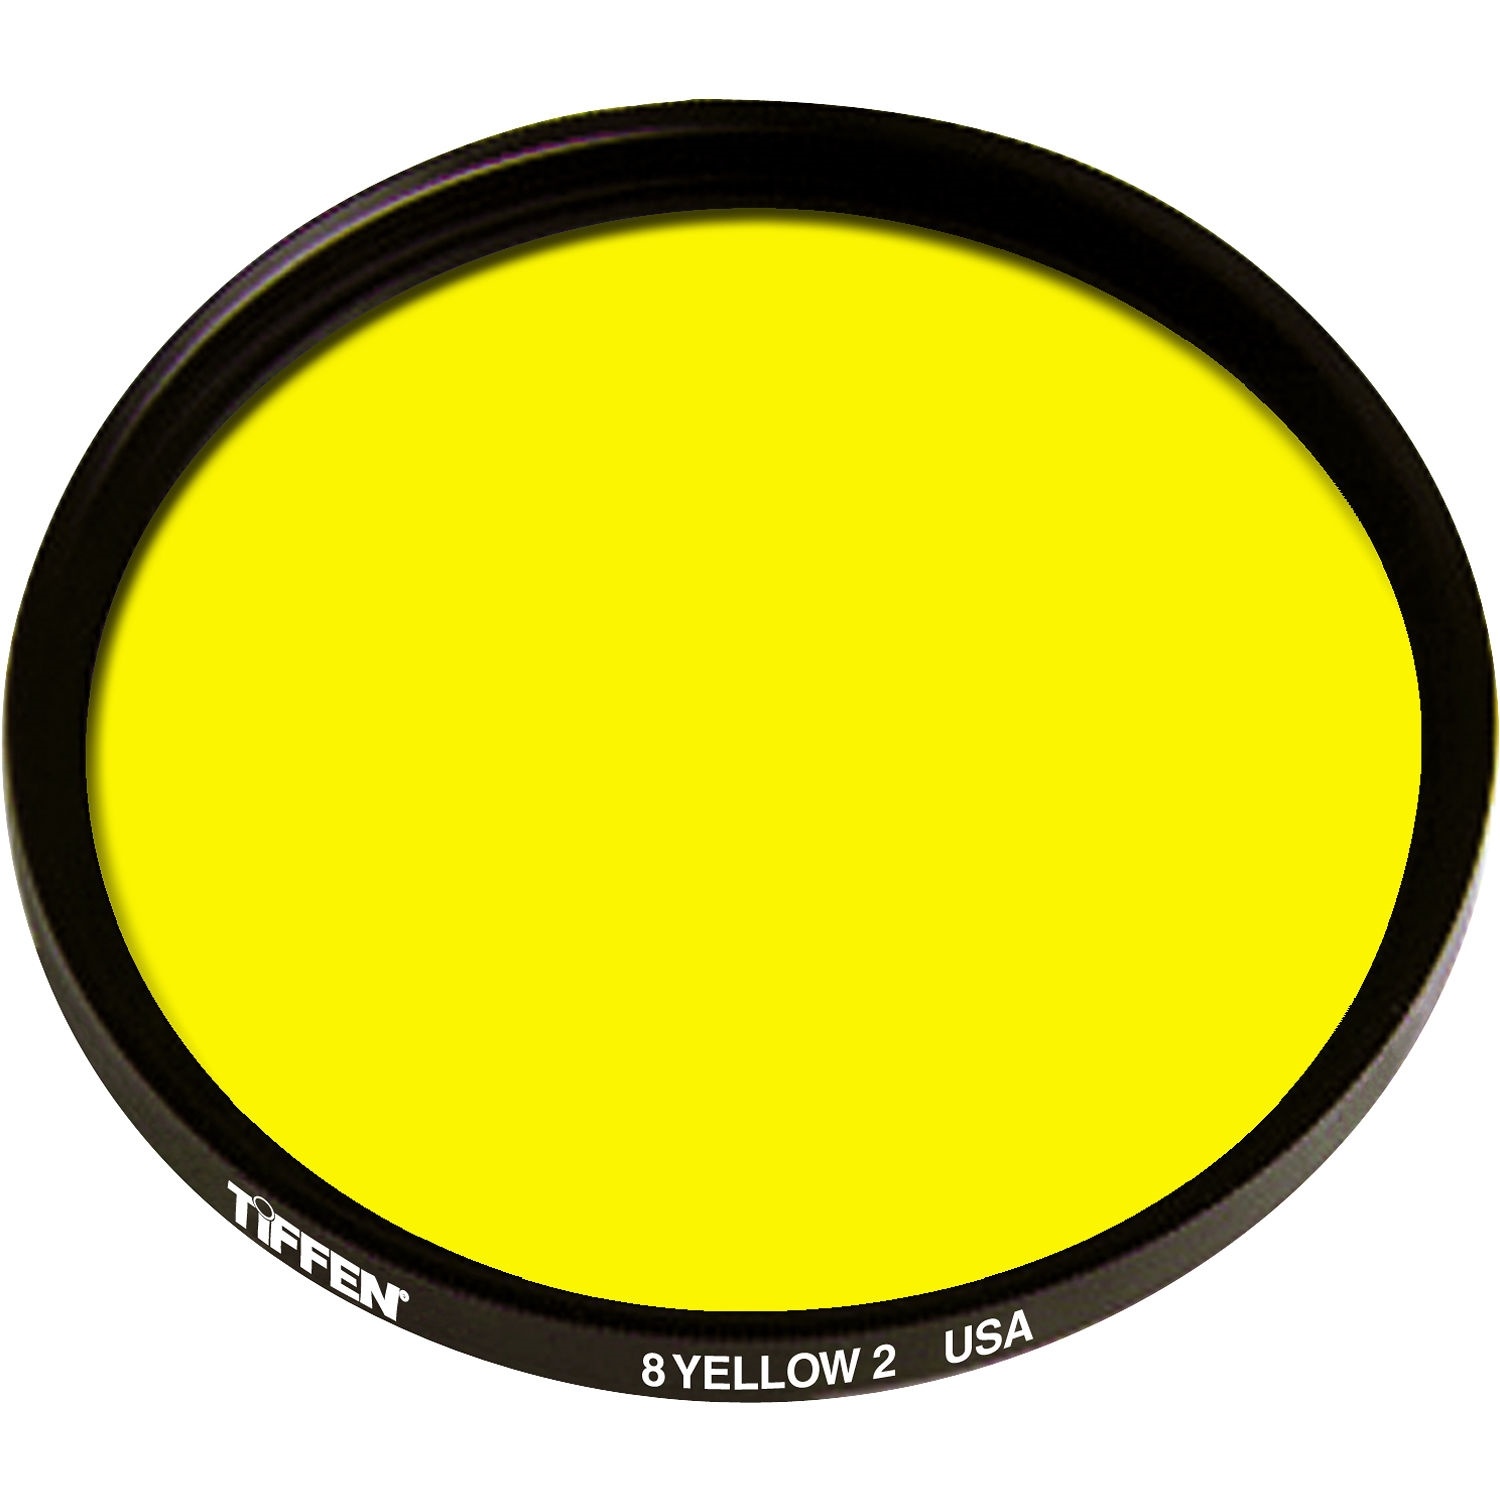 Tiffen 43mm Yellow 2 8 Glass Filter for Black & White Film